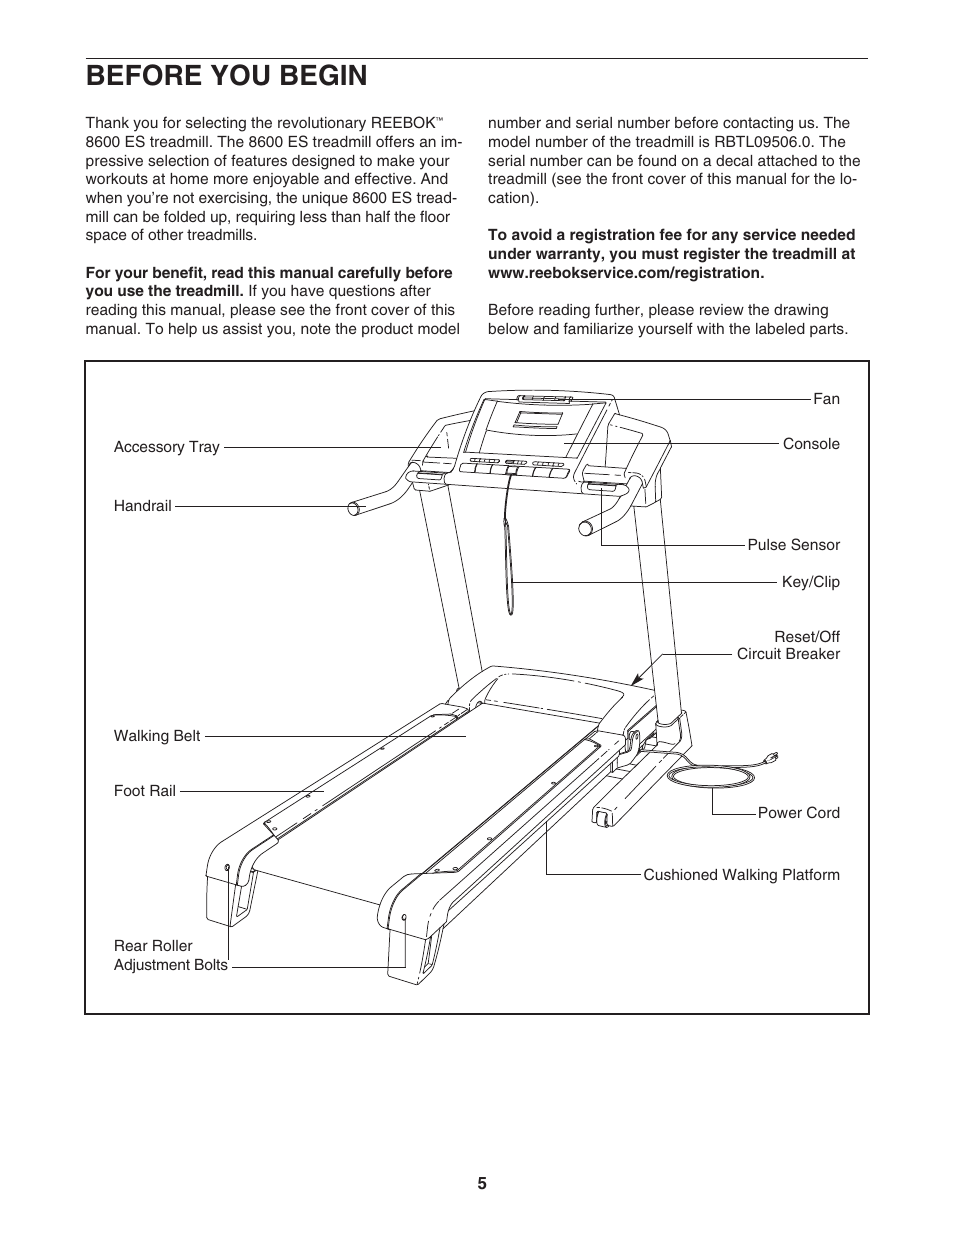 Before you begin | Reebok Fitness 8600 ES treadmill RBTL09506.0 User Manual  | Page 5 / 36